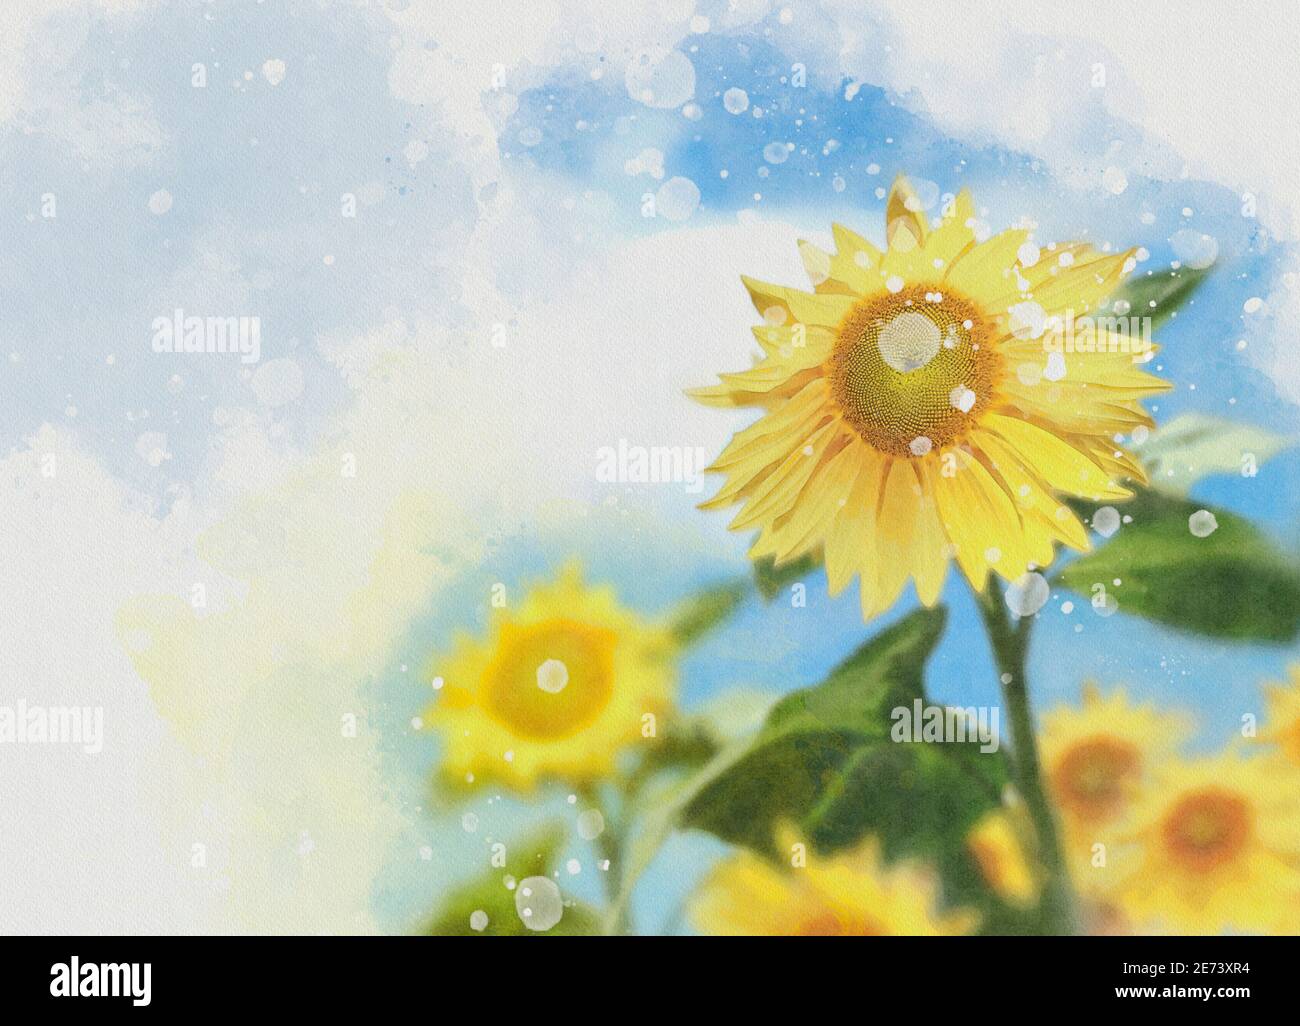 Sunflowers, illustration Stock Photo